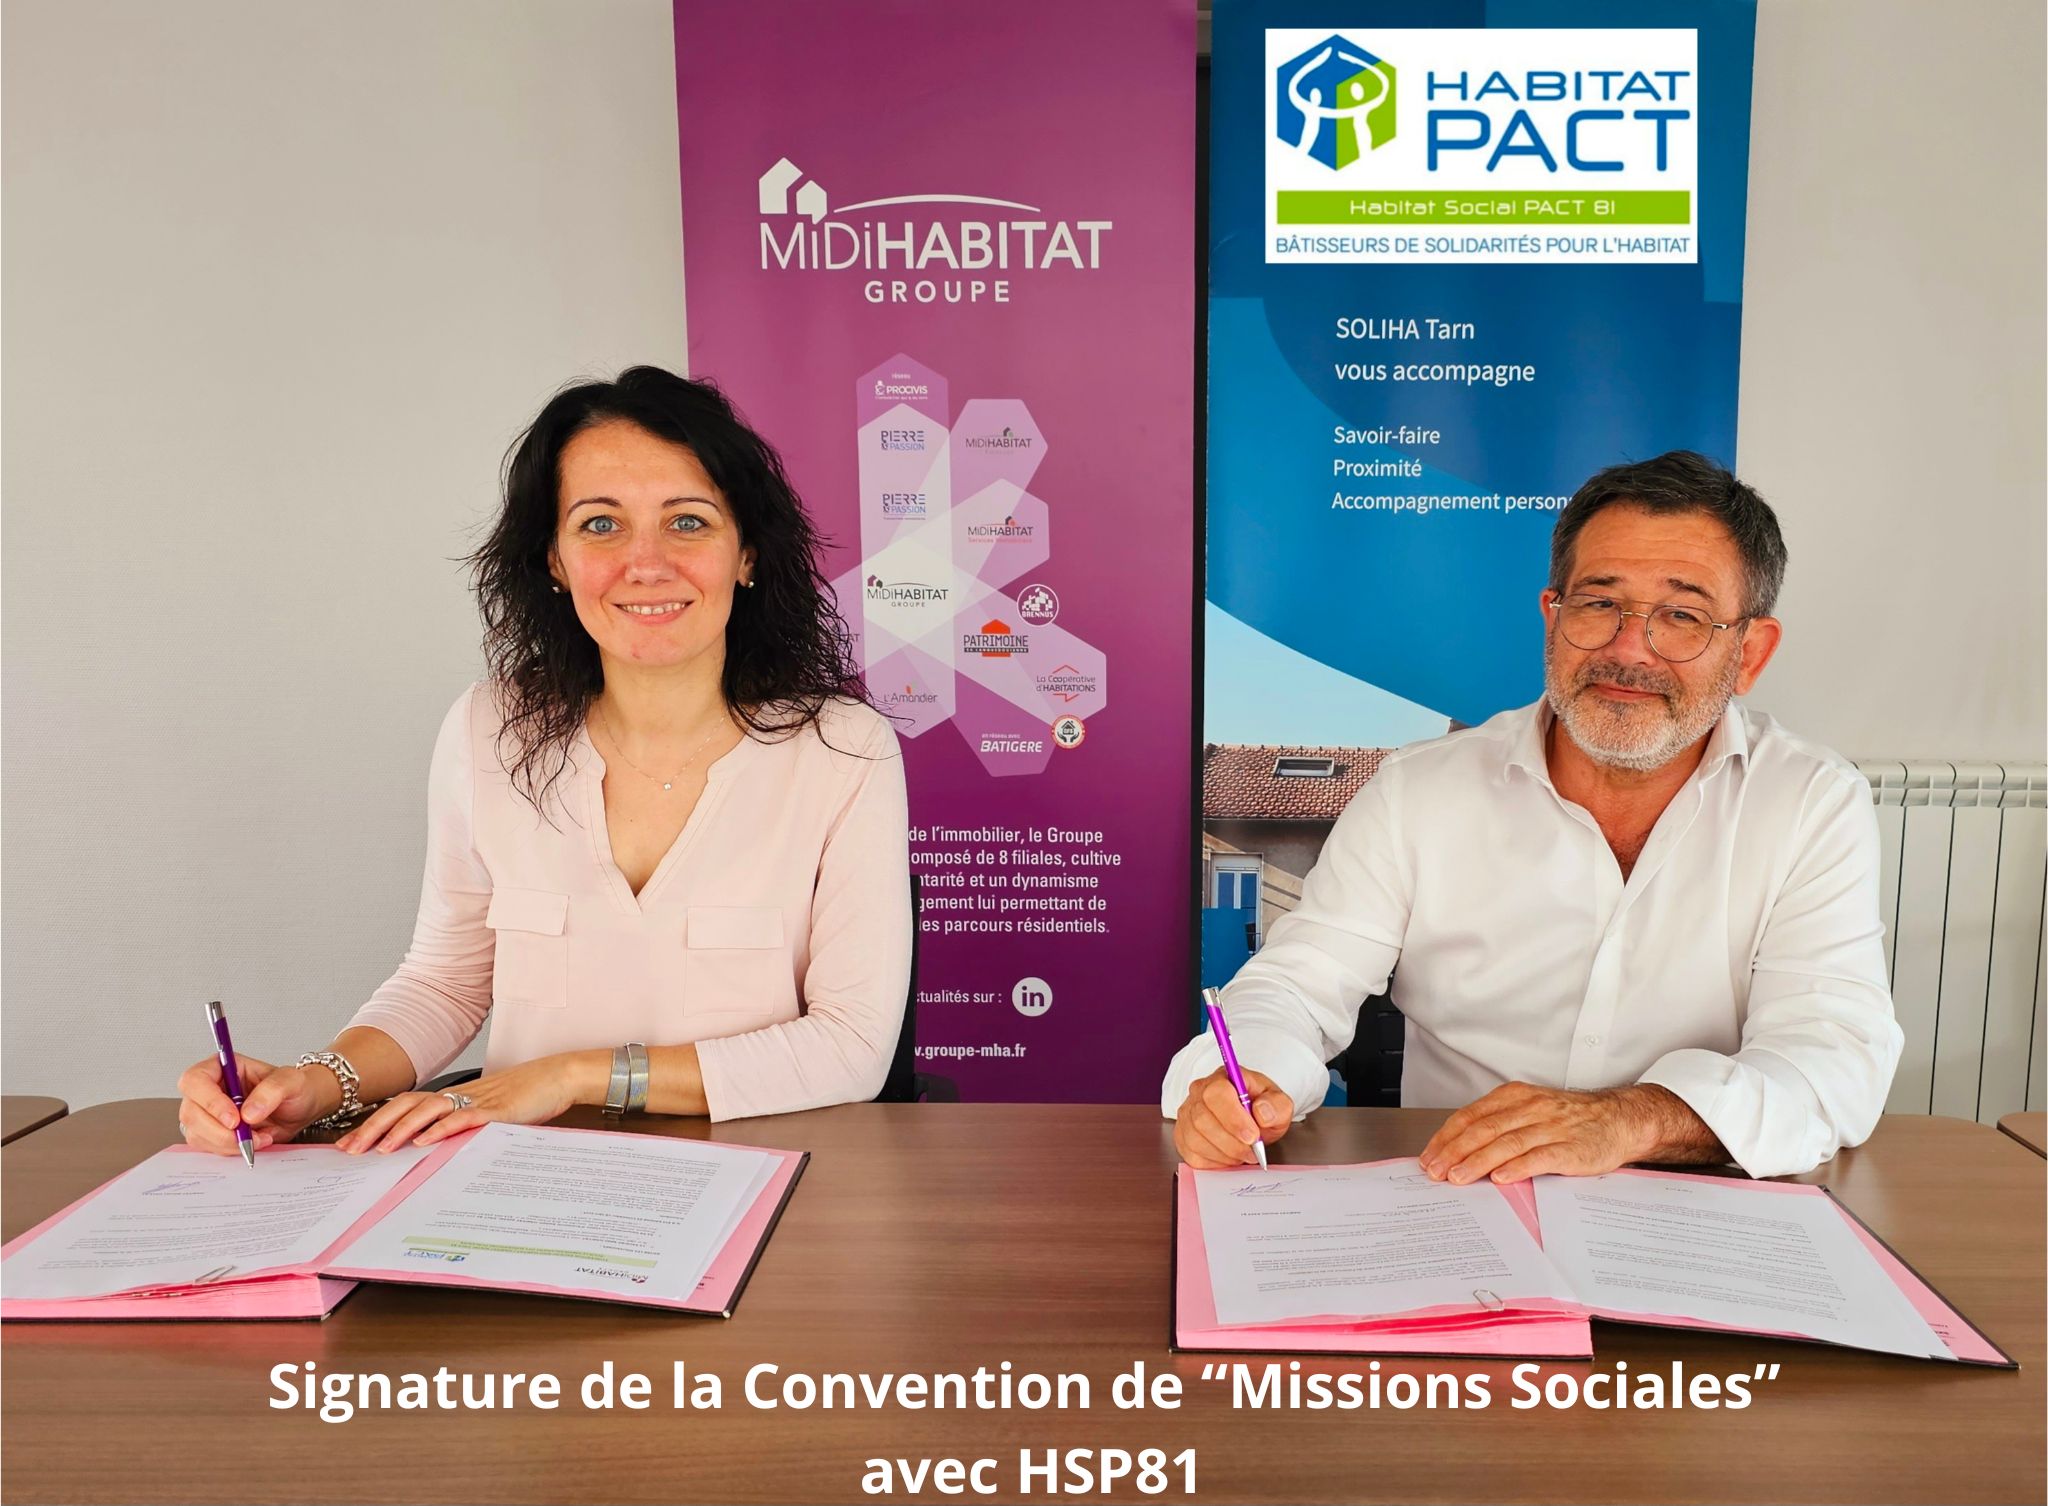 Signature de la Convention de “Missions Sociales” avec HSP81